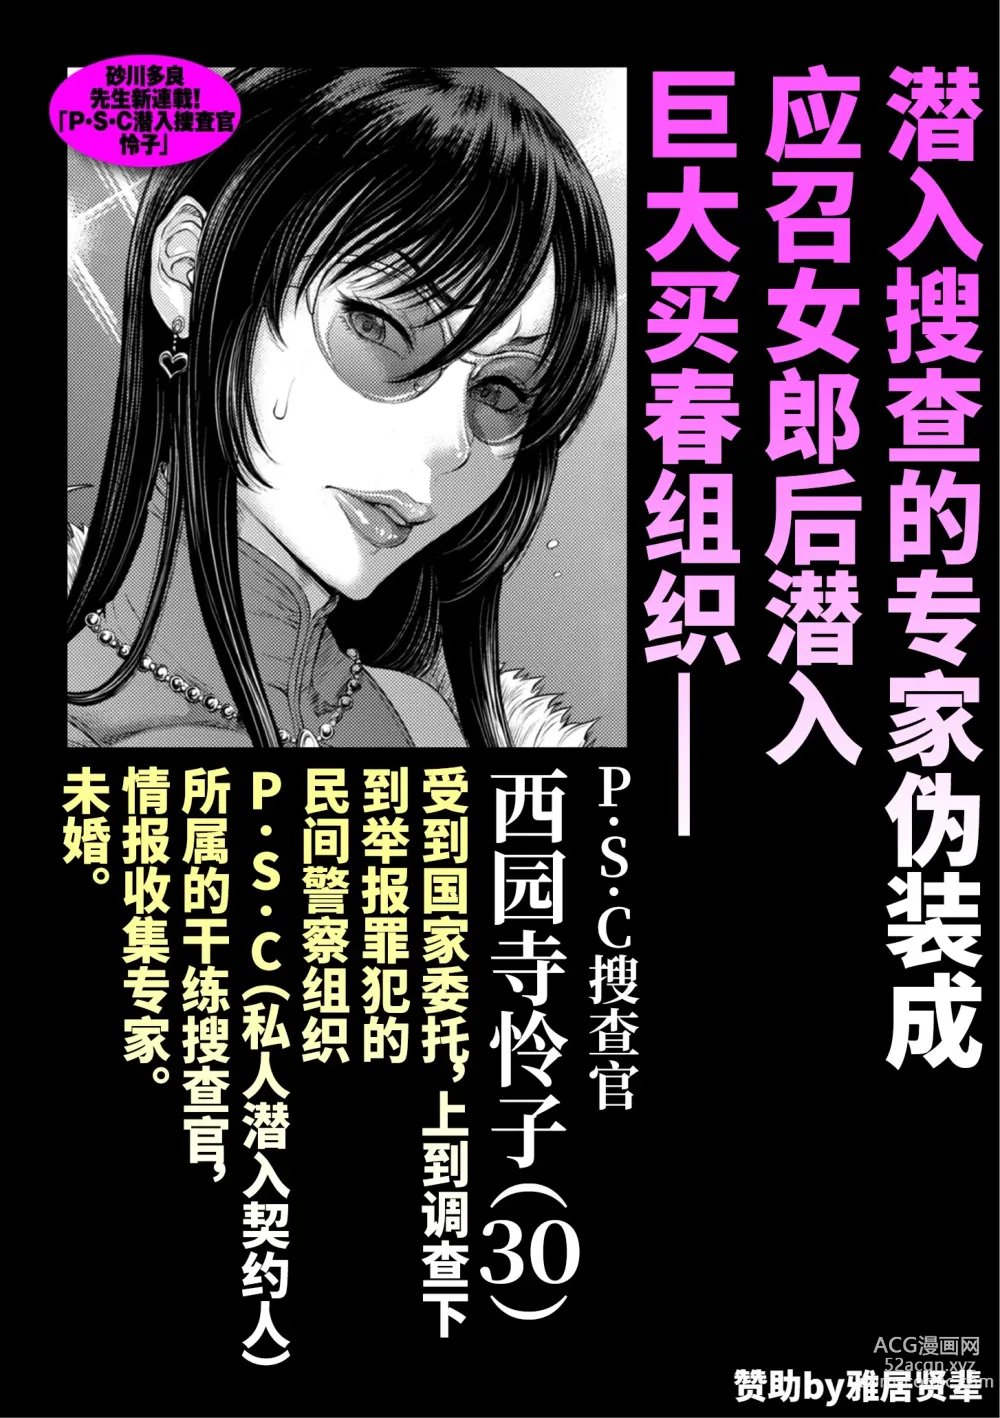 Page 1 of manga P.S.C Sennyuu Sousakan Reiko 2